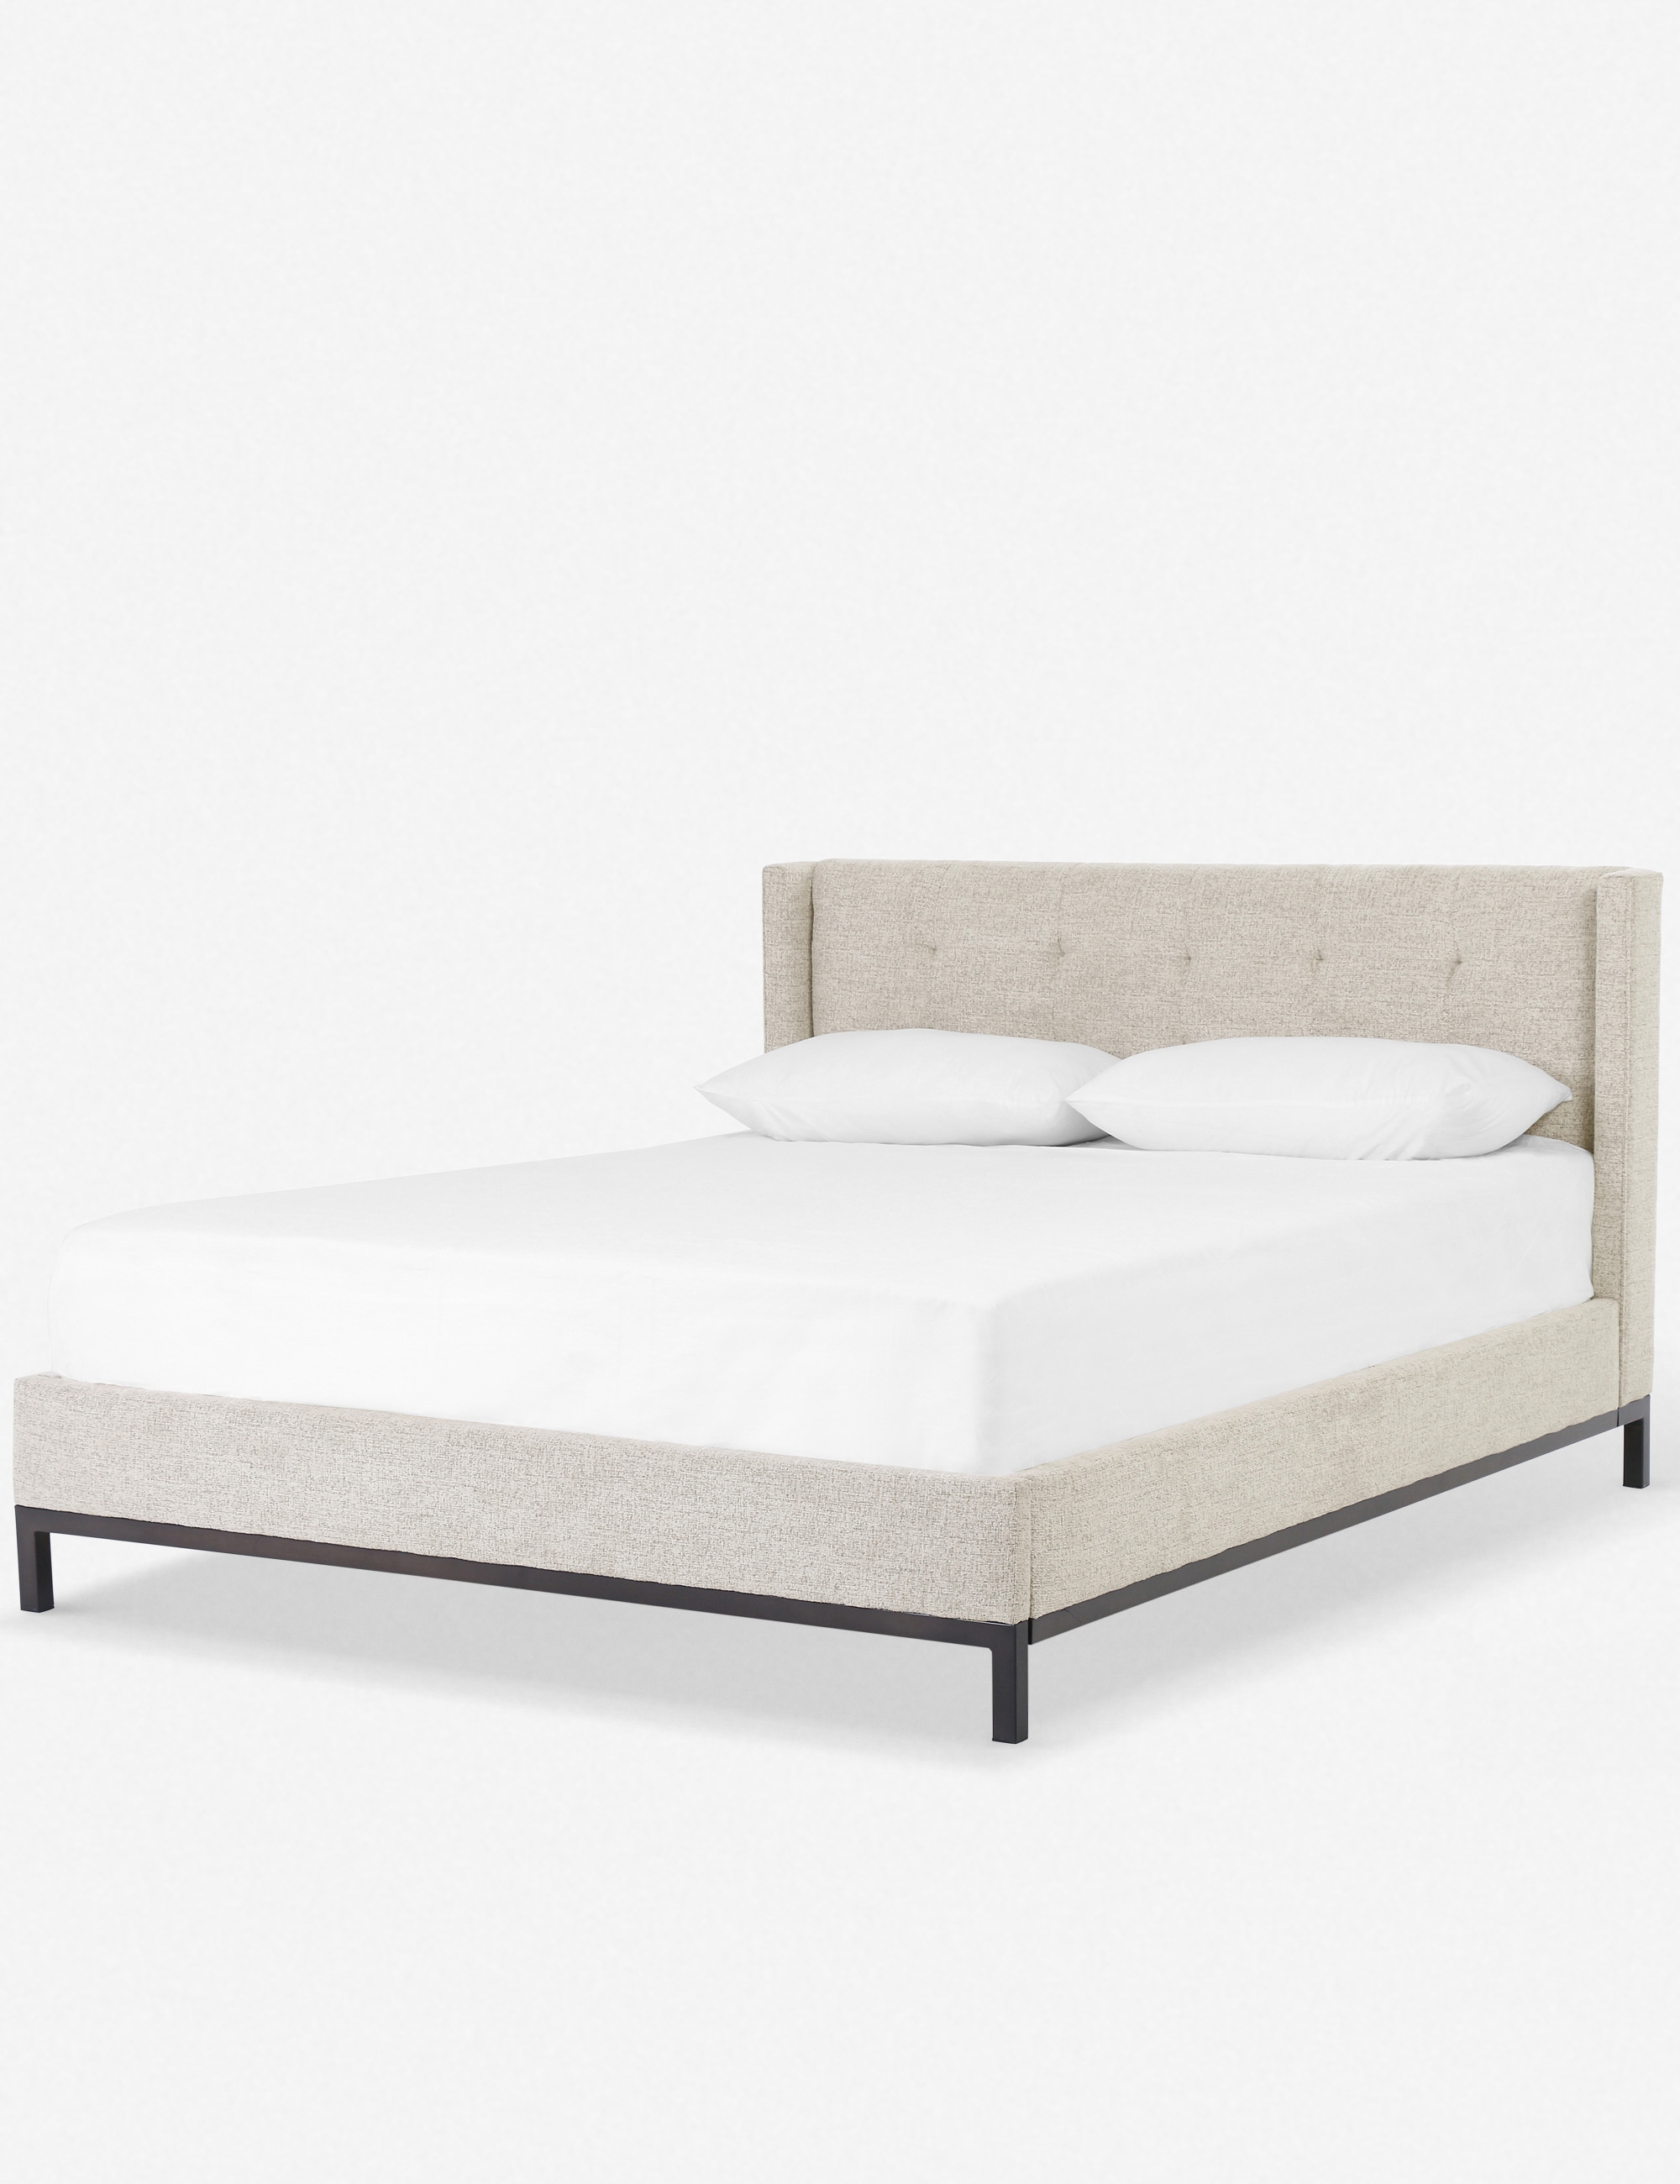 Vedette Queen Bed, Plushtone Linen - Image 1